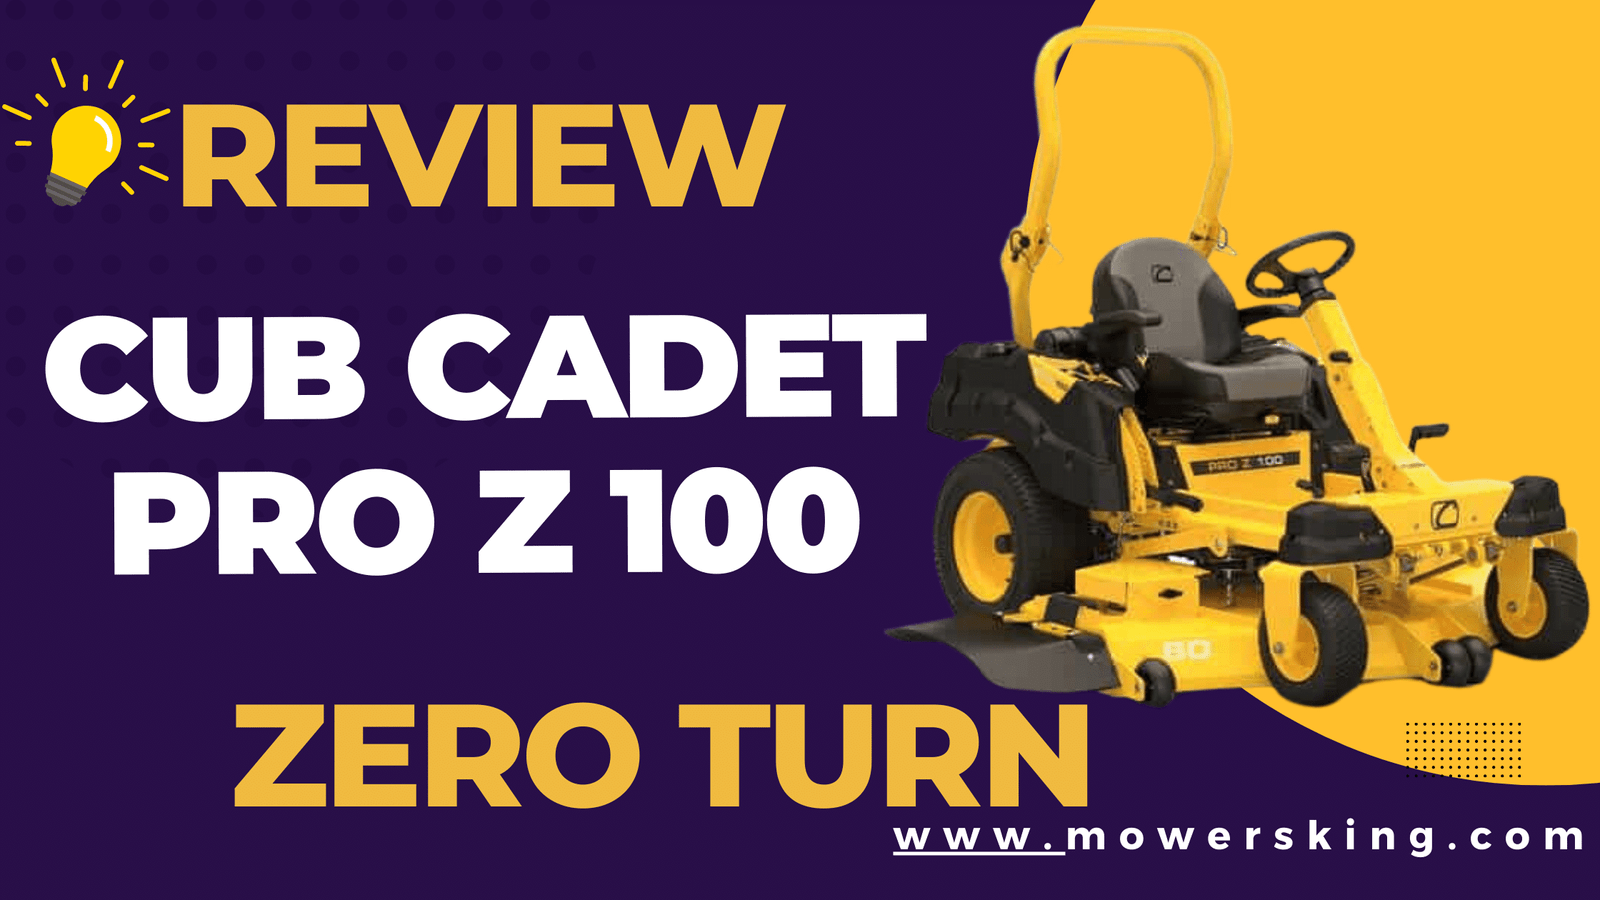 Cub Cadet Pro Z 100 review